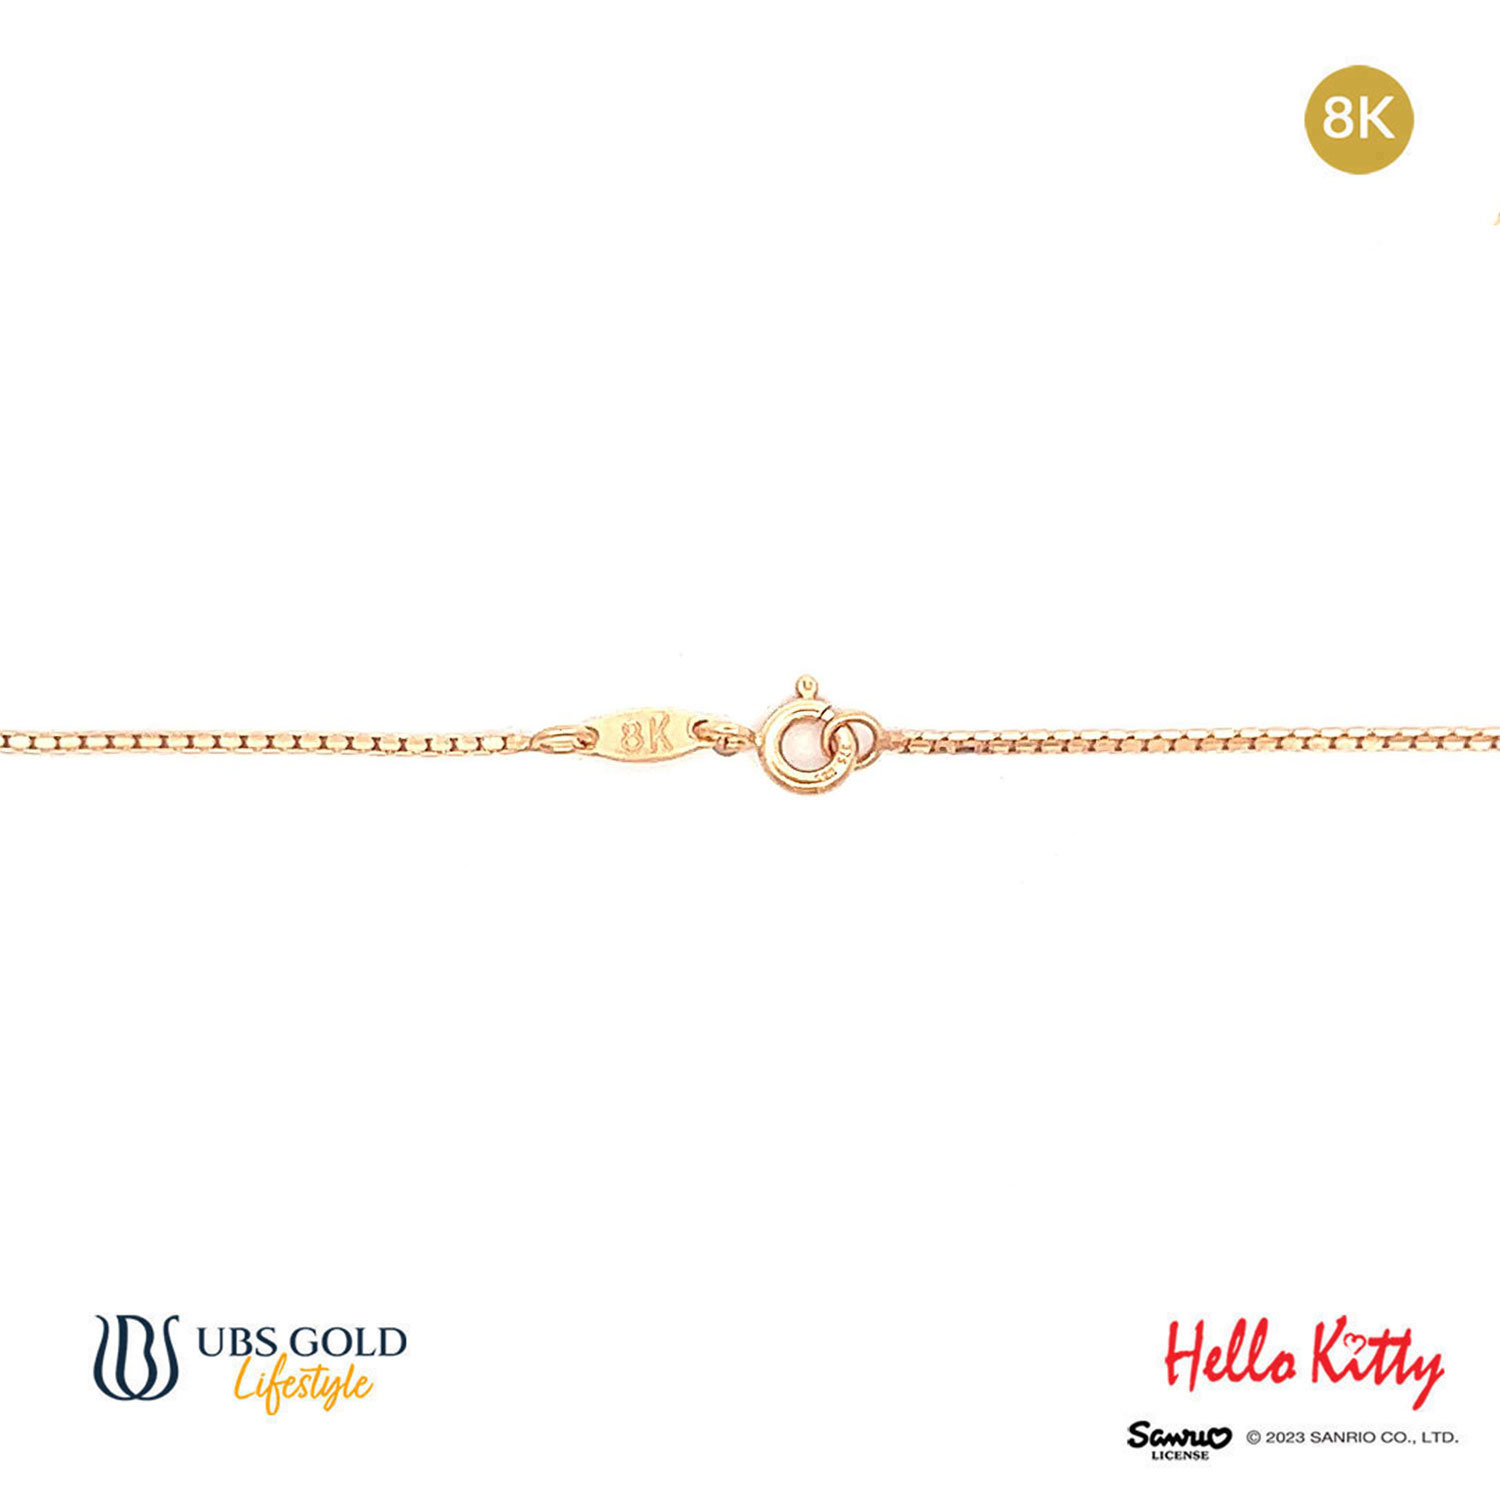 UBS Gold Kalung Emas Anak Sanrio Hello Kitty - Kkz0101K - 8K